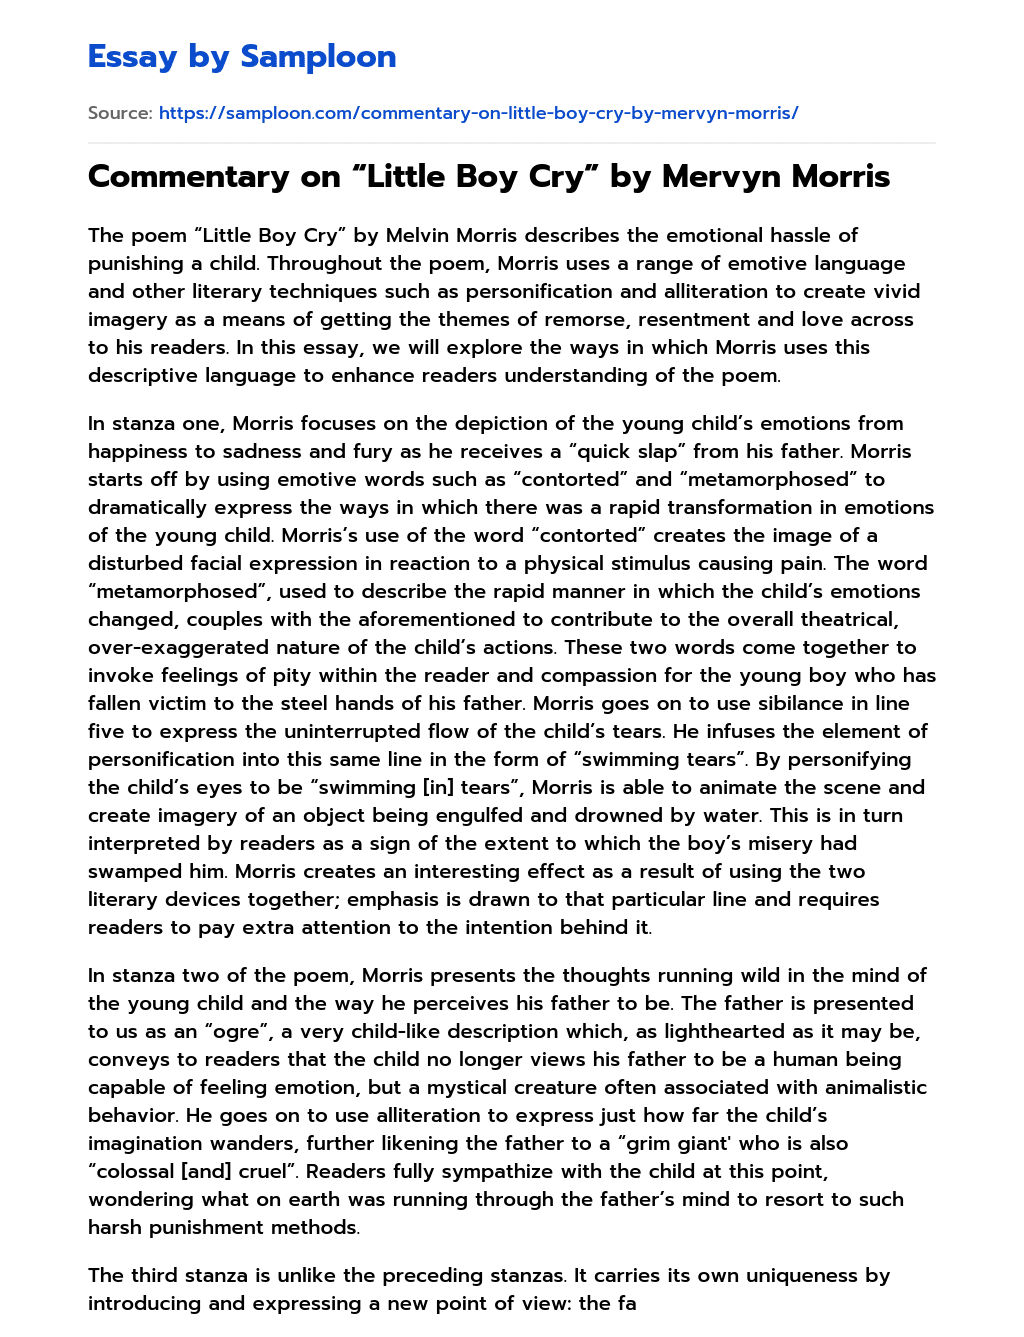 Commentary on “Little Boy Cry” by Mervyn Morris essay